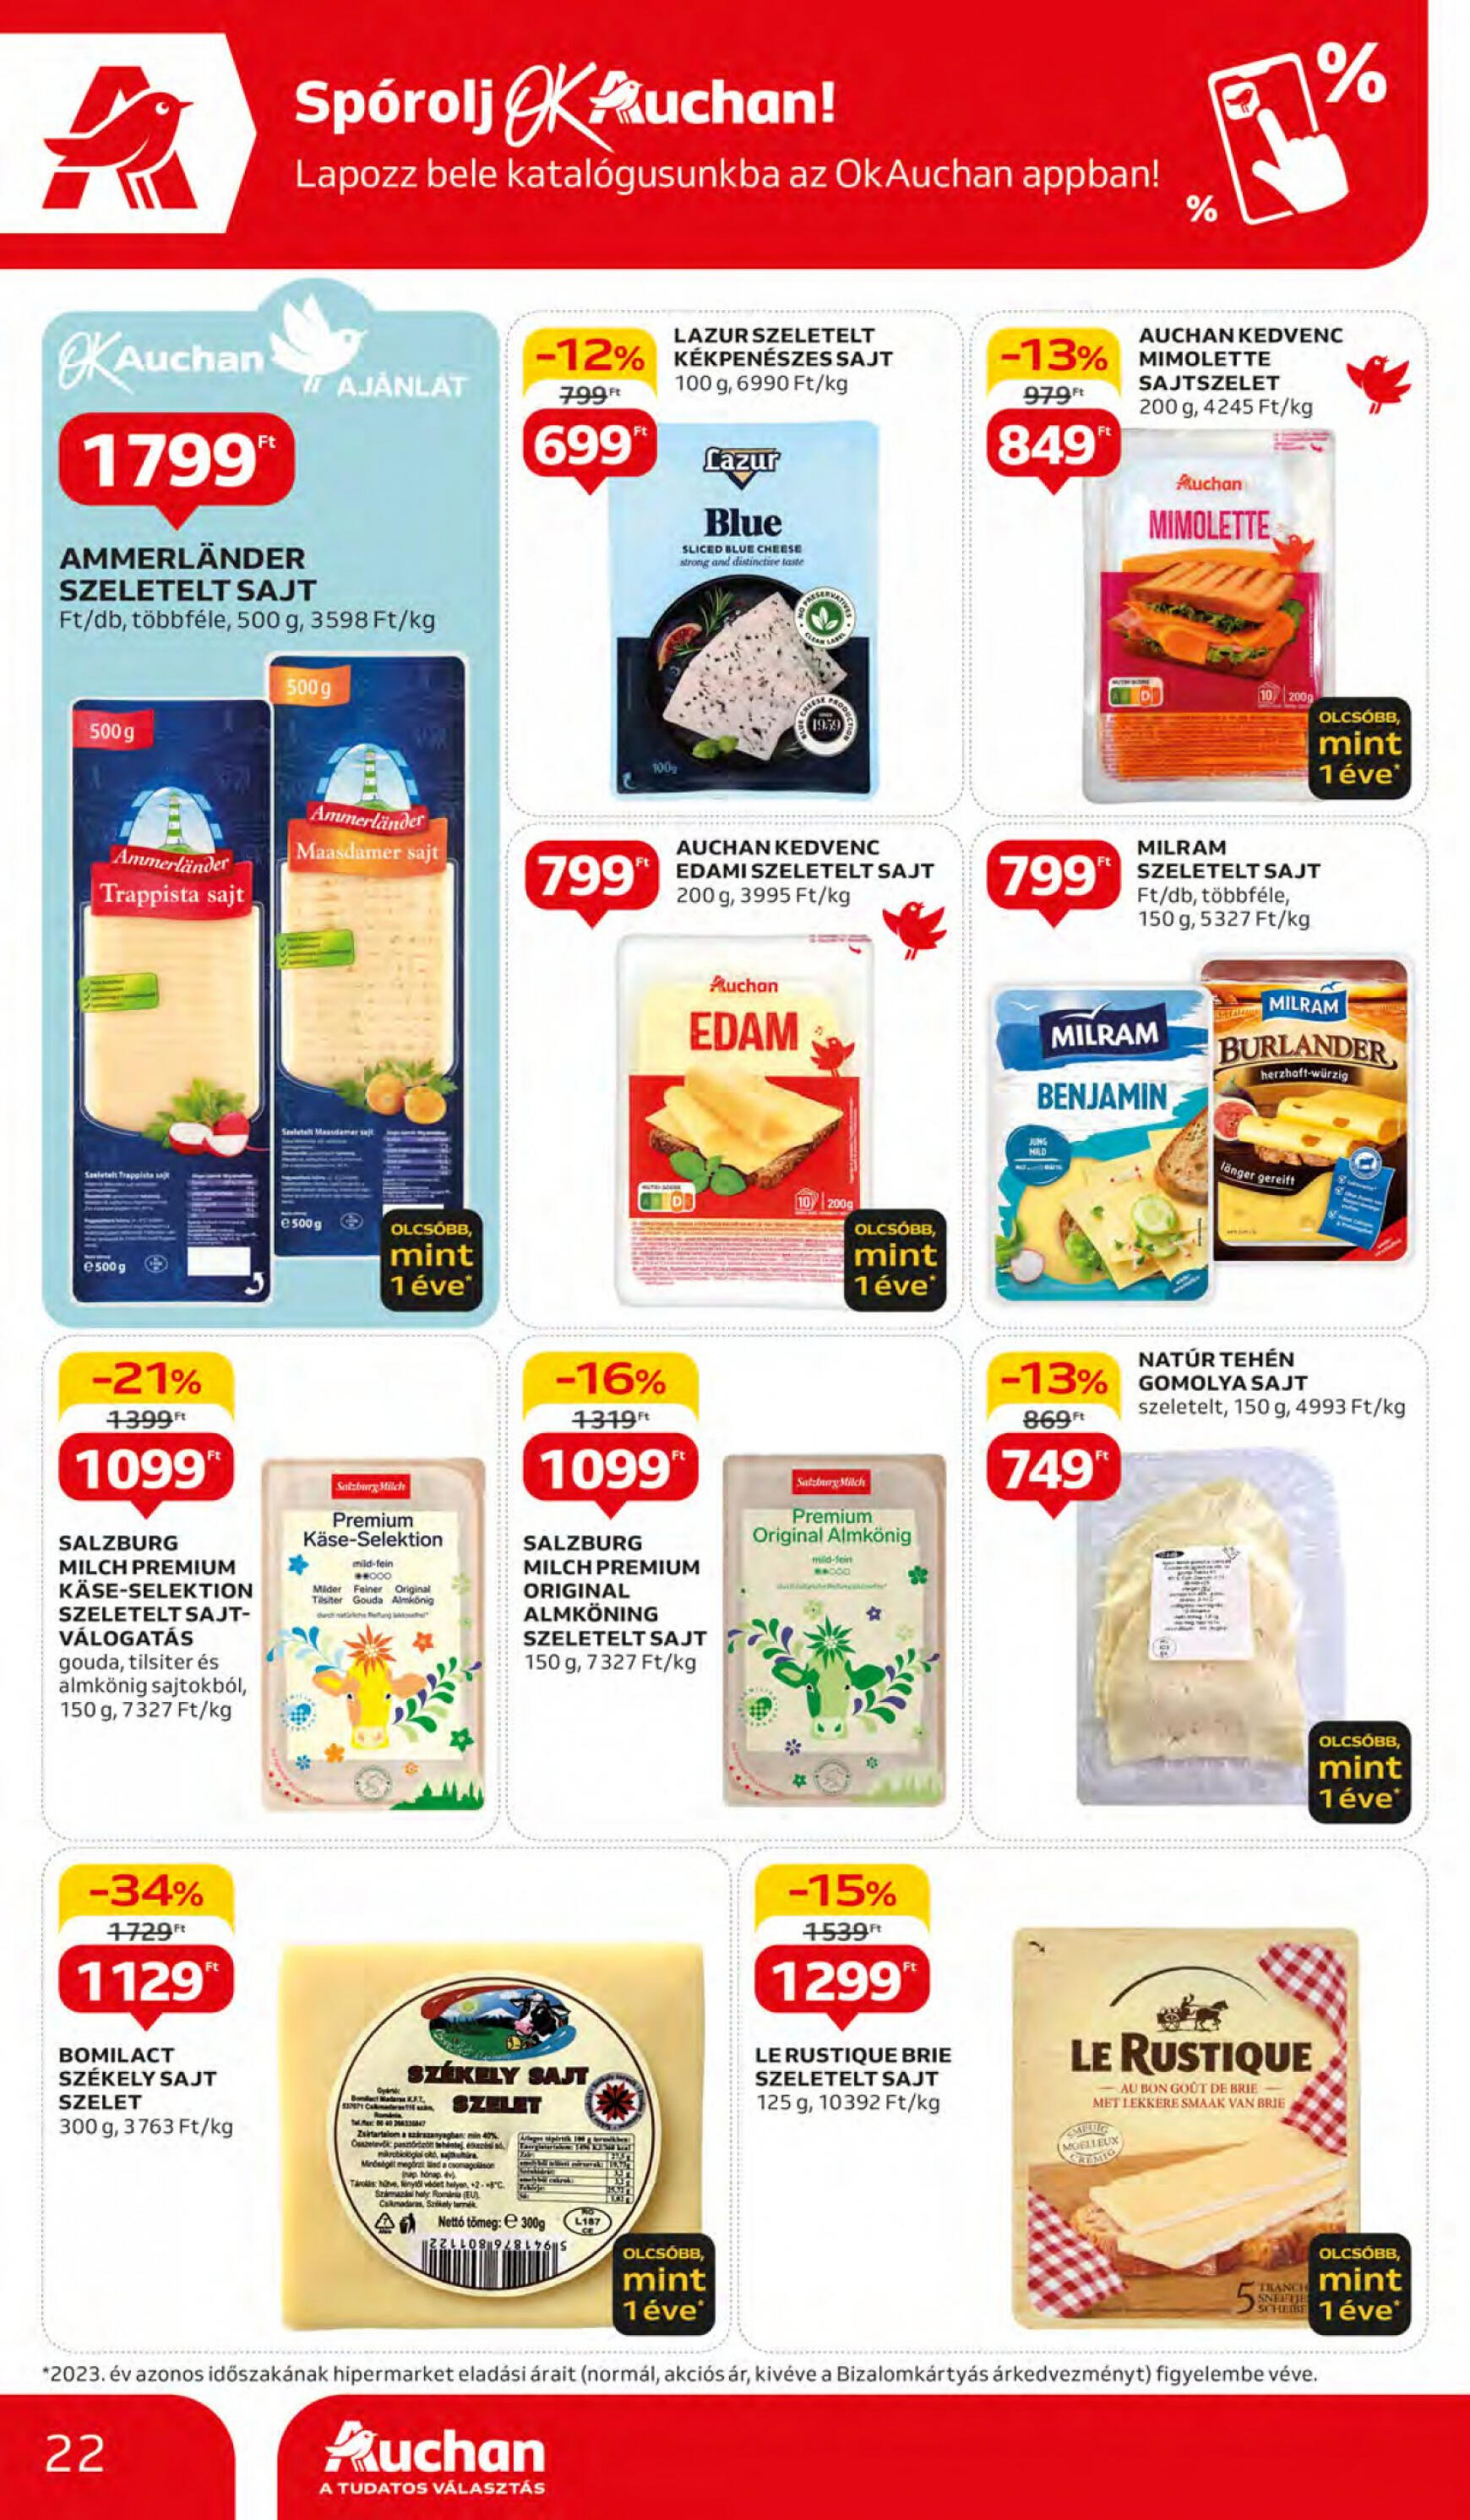 auchan - Aktuális újság Auchan 04.11. - 04.17. - page: 22